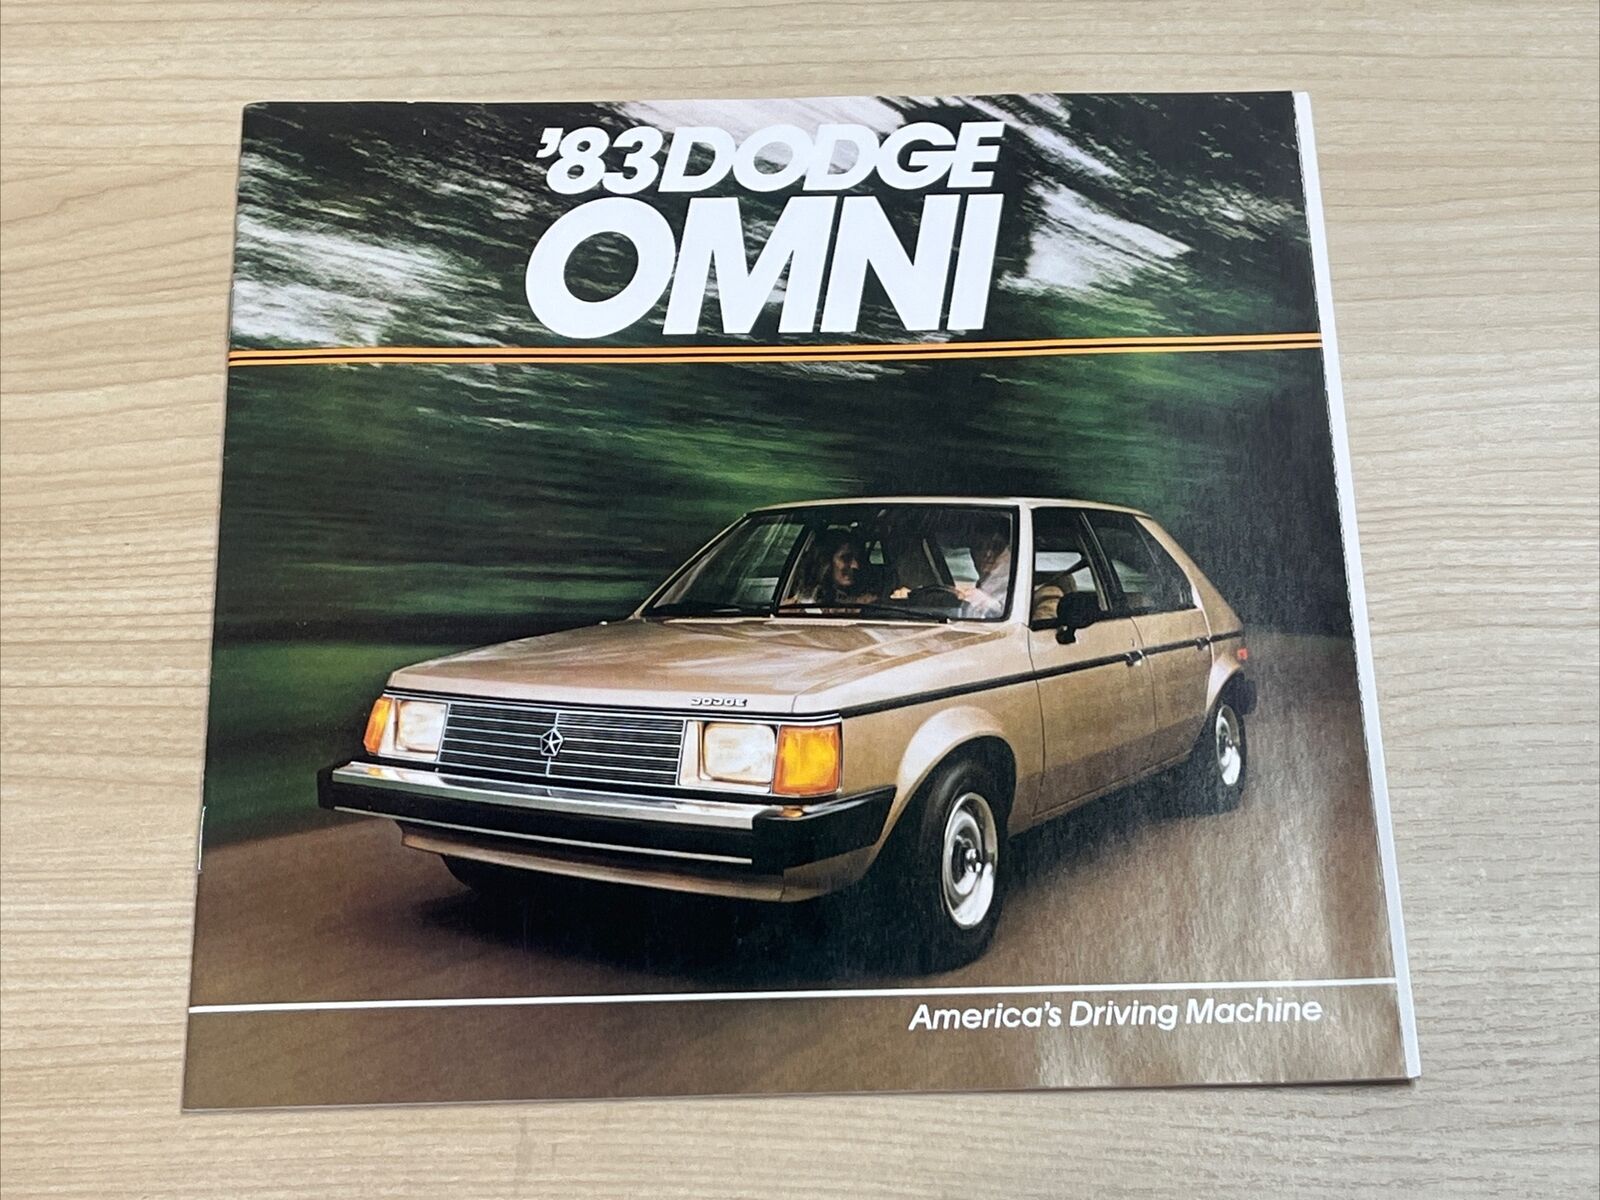 1983 Dodge Omni Chrysler Car Sales Brochure Americas Driving Machine